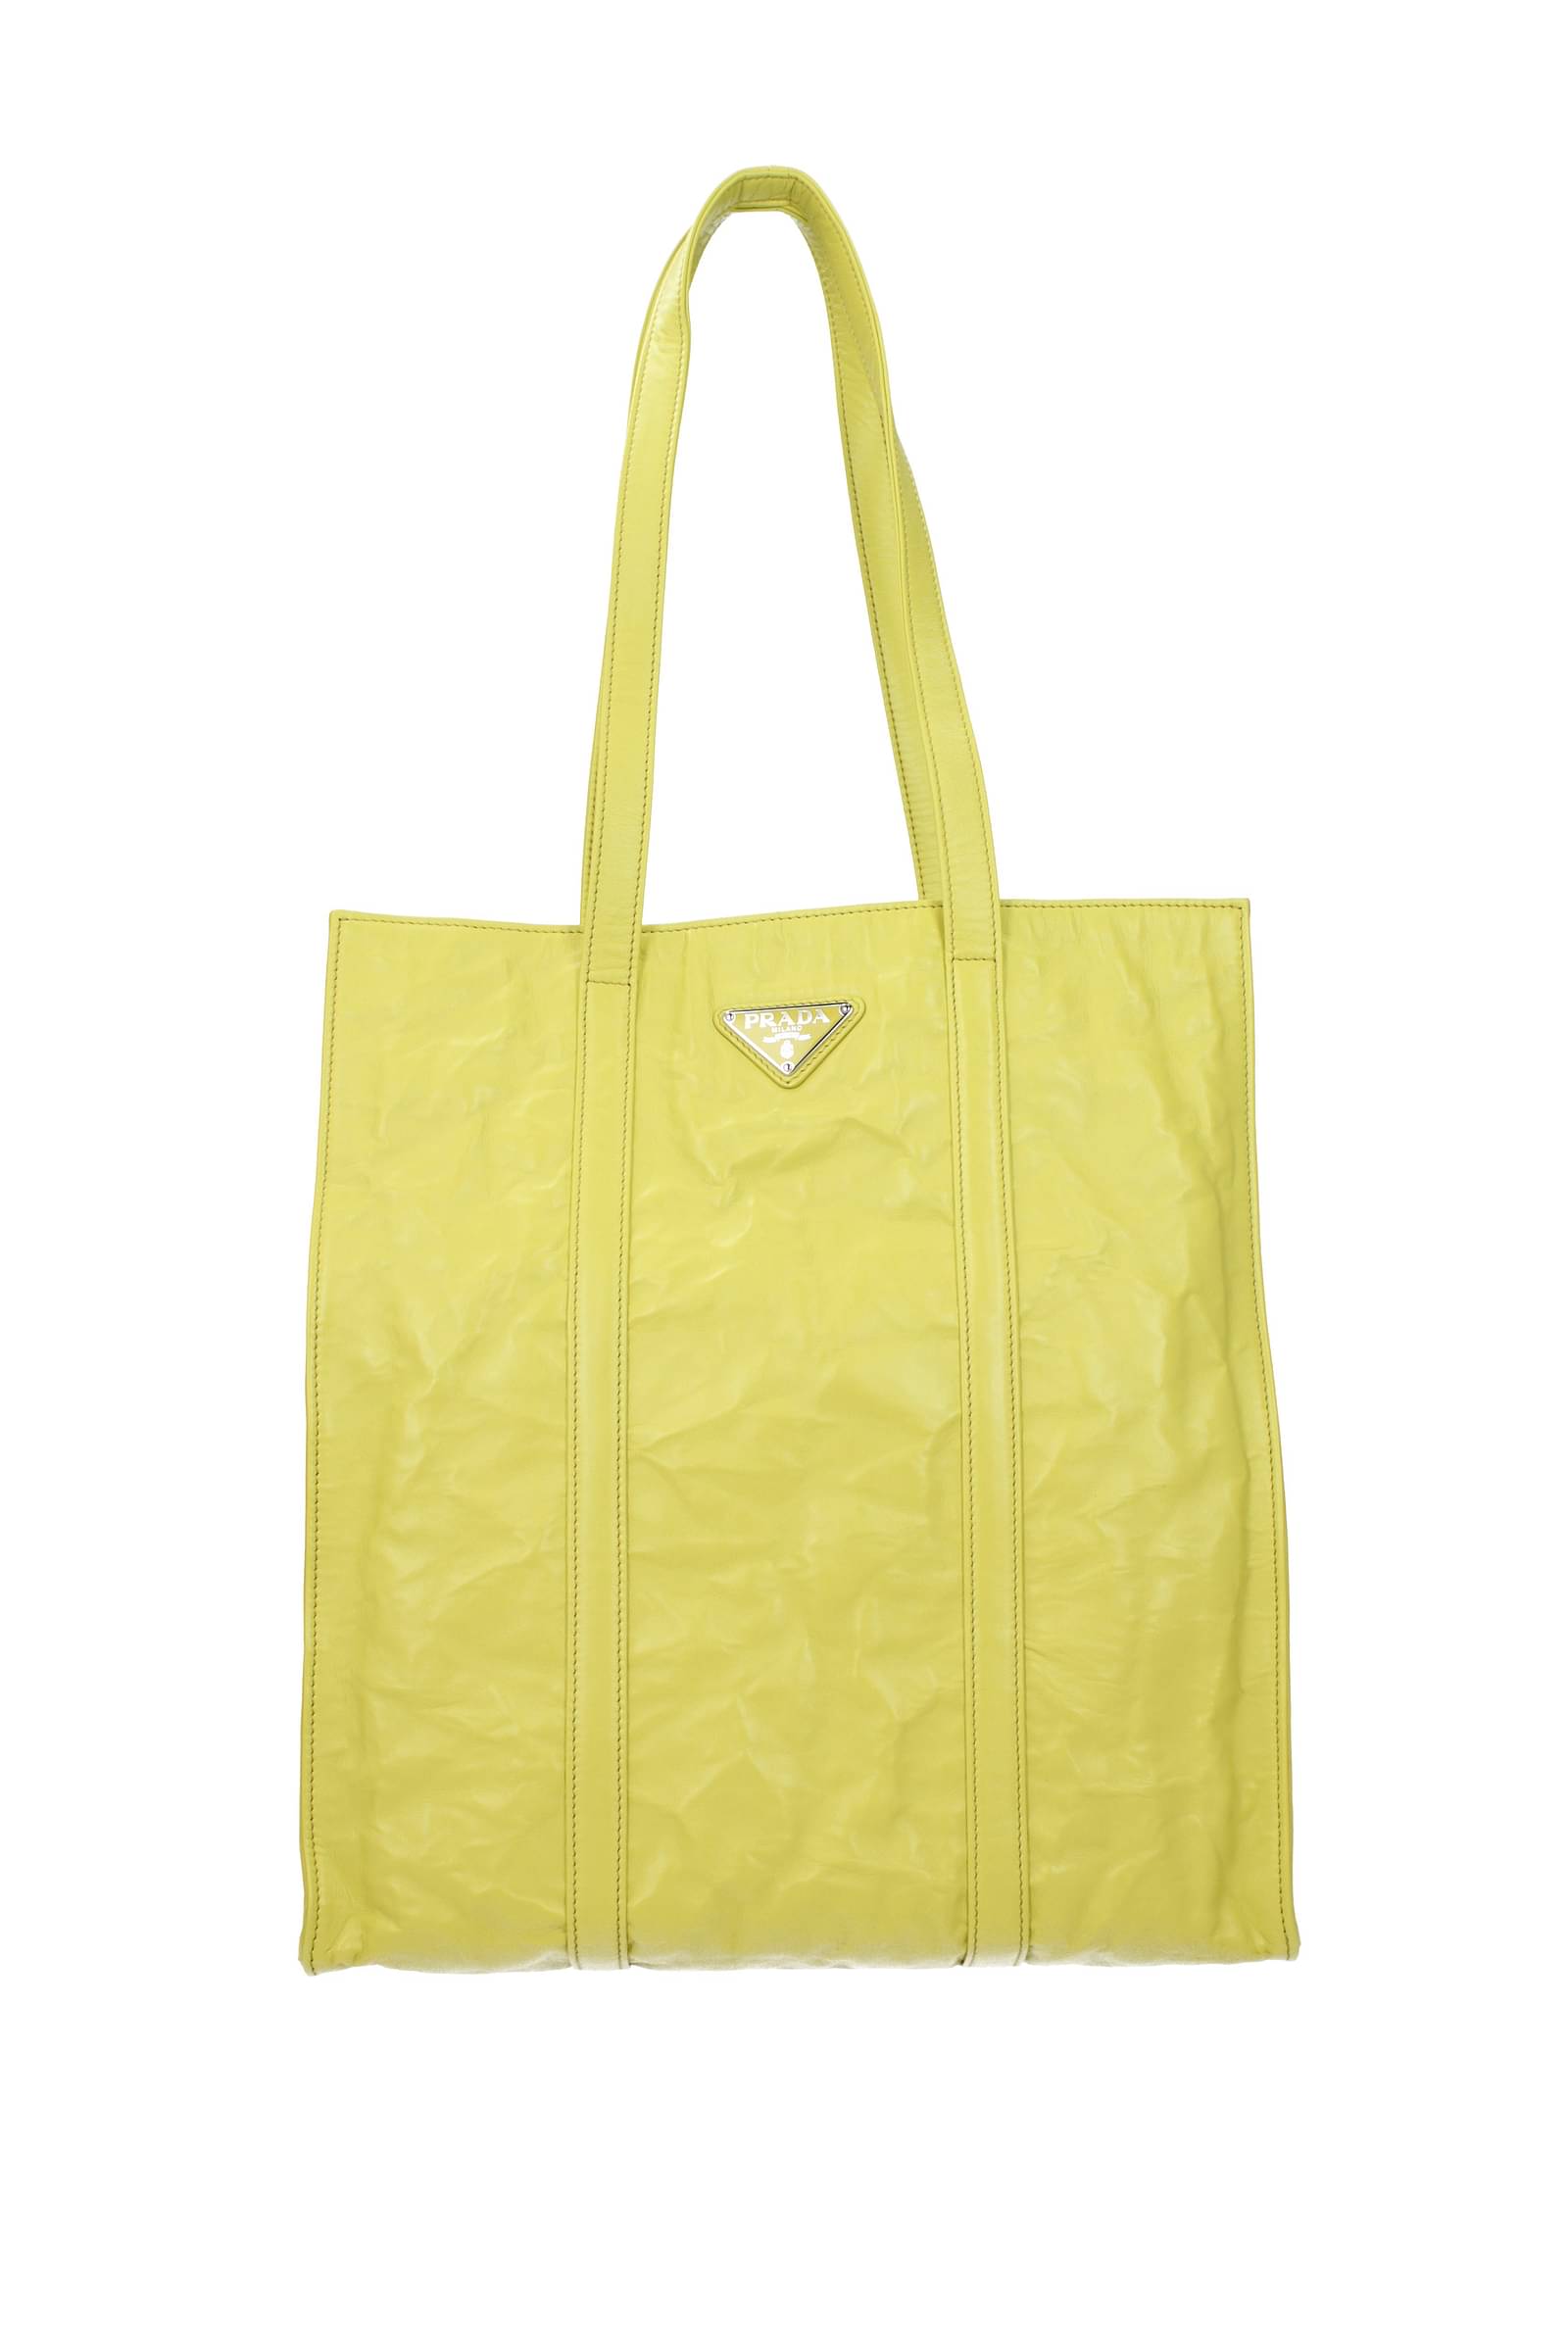 Prada BN2896 Women's Saffiano Lux Handbag,Shoulder Bag Yellow BF566657 |  eBay